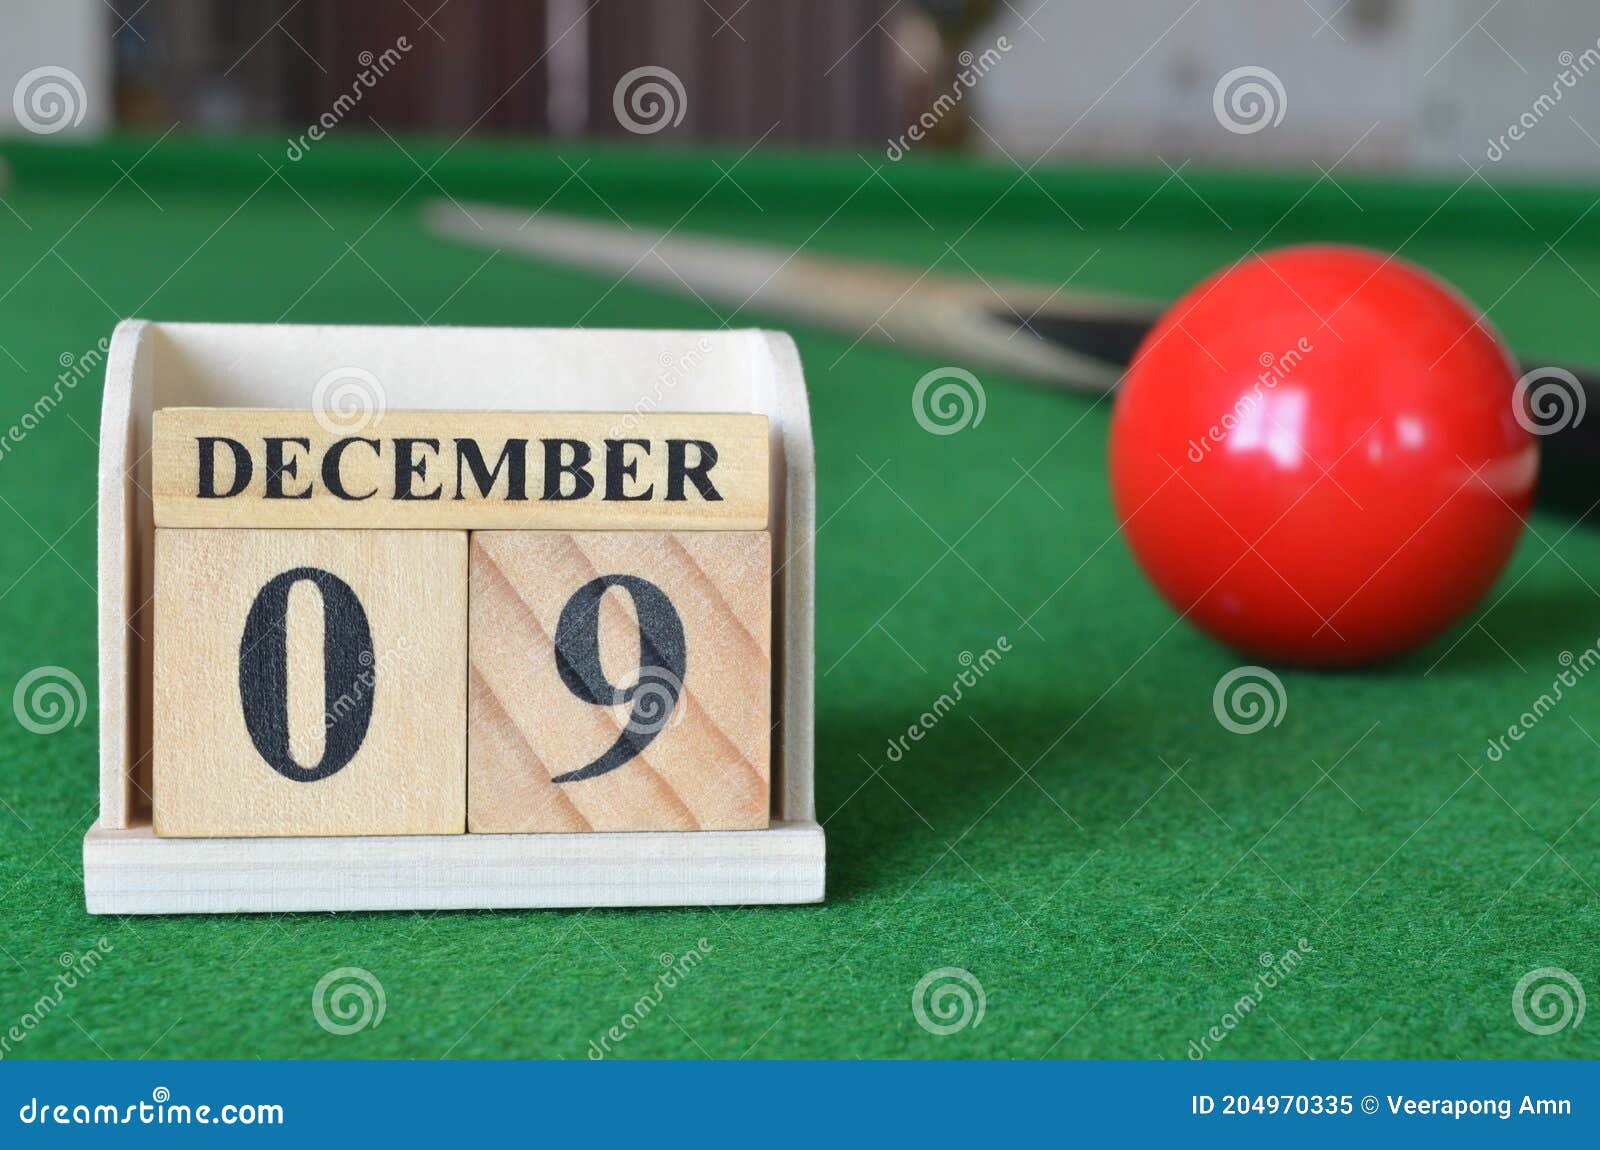 December 09, Number Cube on Snooker Table, Sport Background